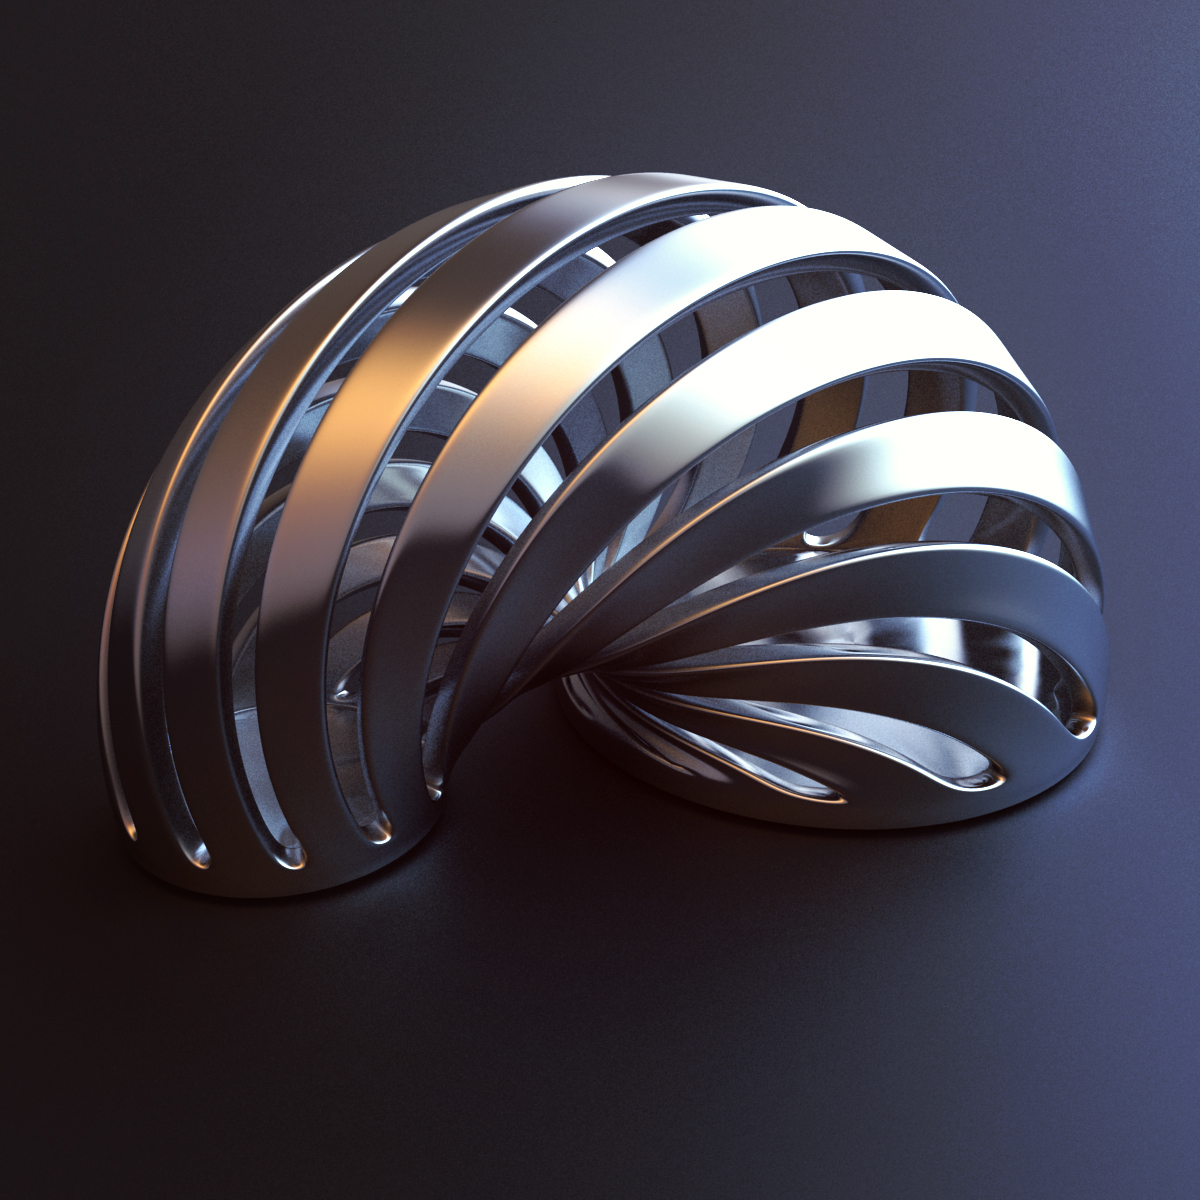 webshocker abstract design 3D 3d print sculptures art modeling Render